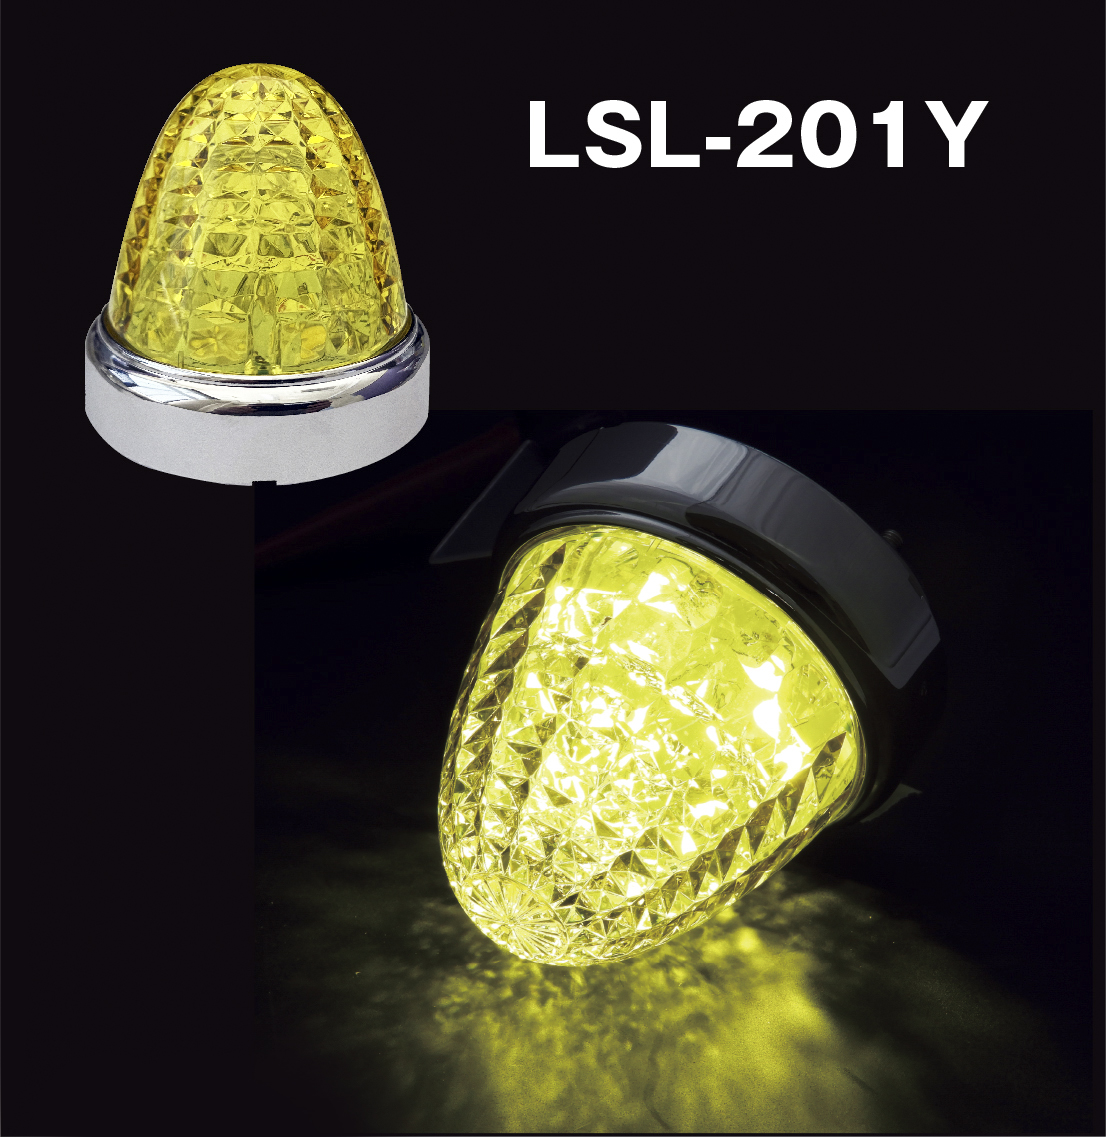 LSL-201Y LEDクリスタルハイパワーマーカー YY 「激光」 イエロー 